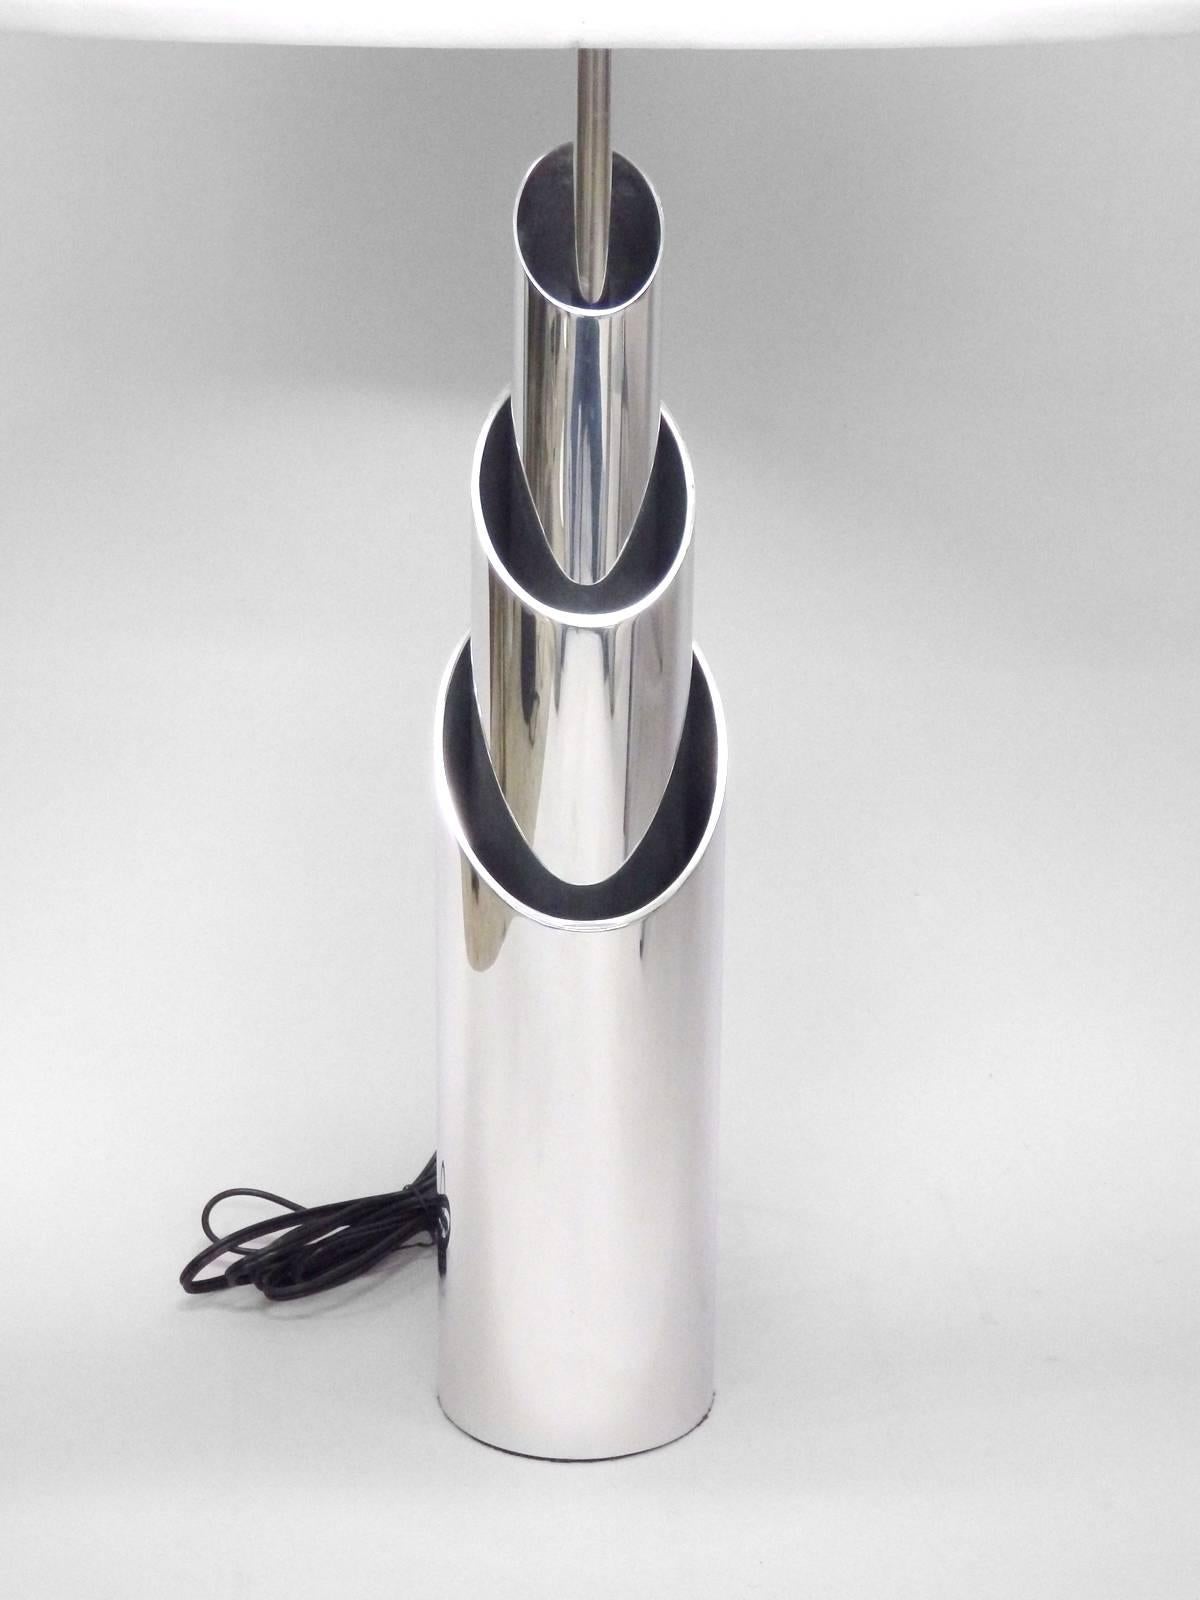 Pair of concentric aluminum tube lamp sculptures attributed to James Prestin.